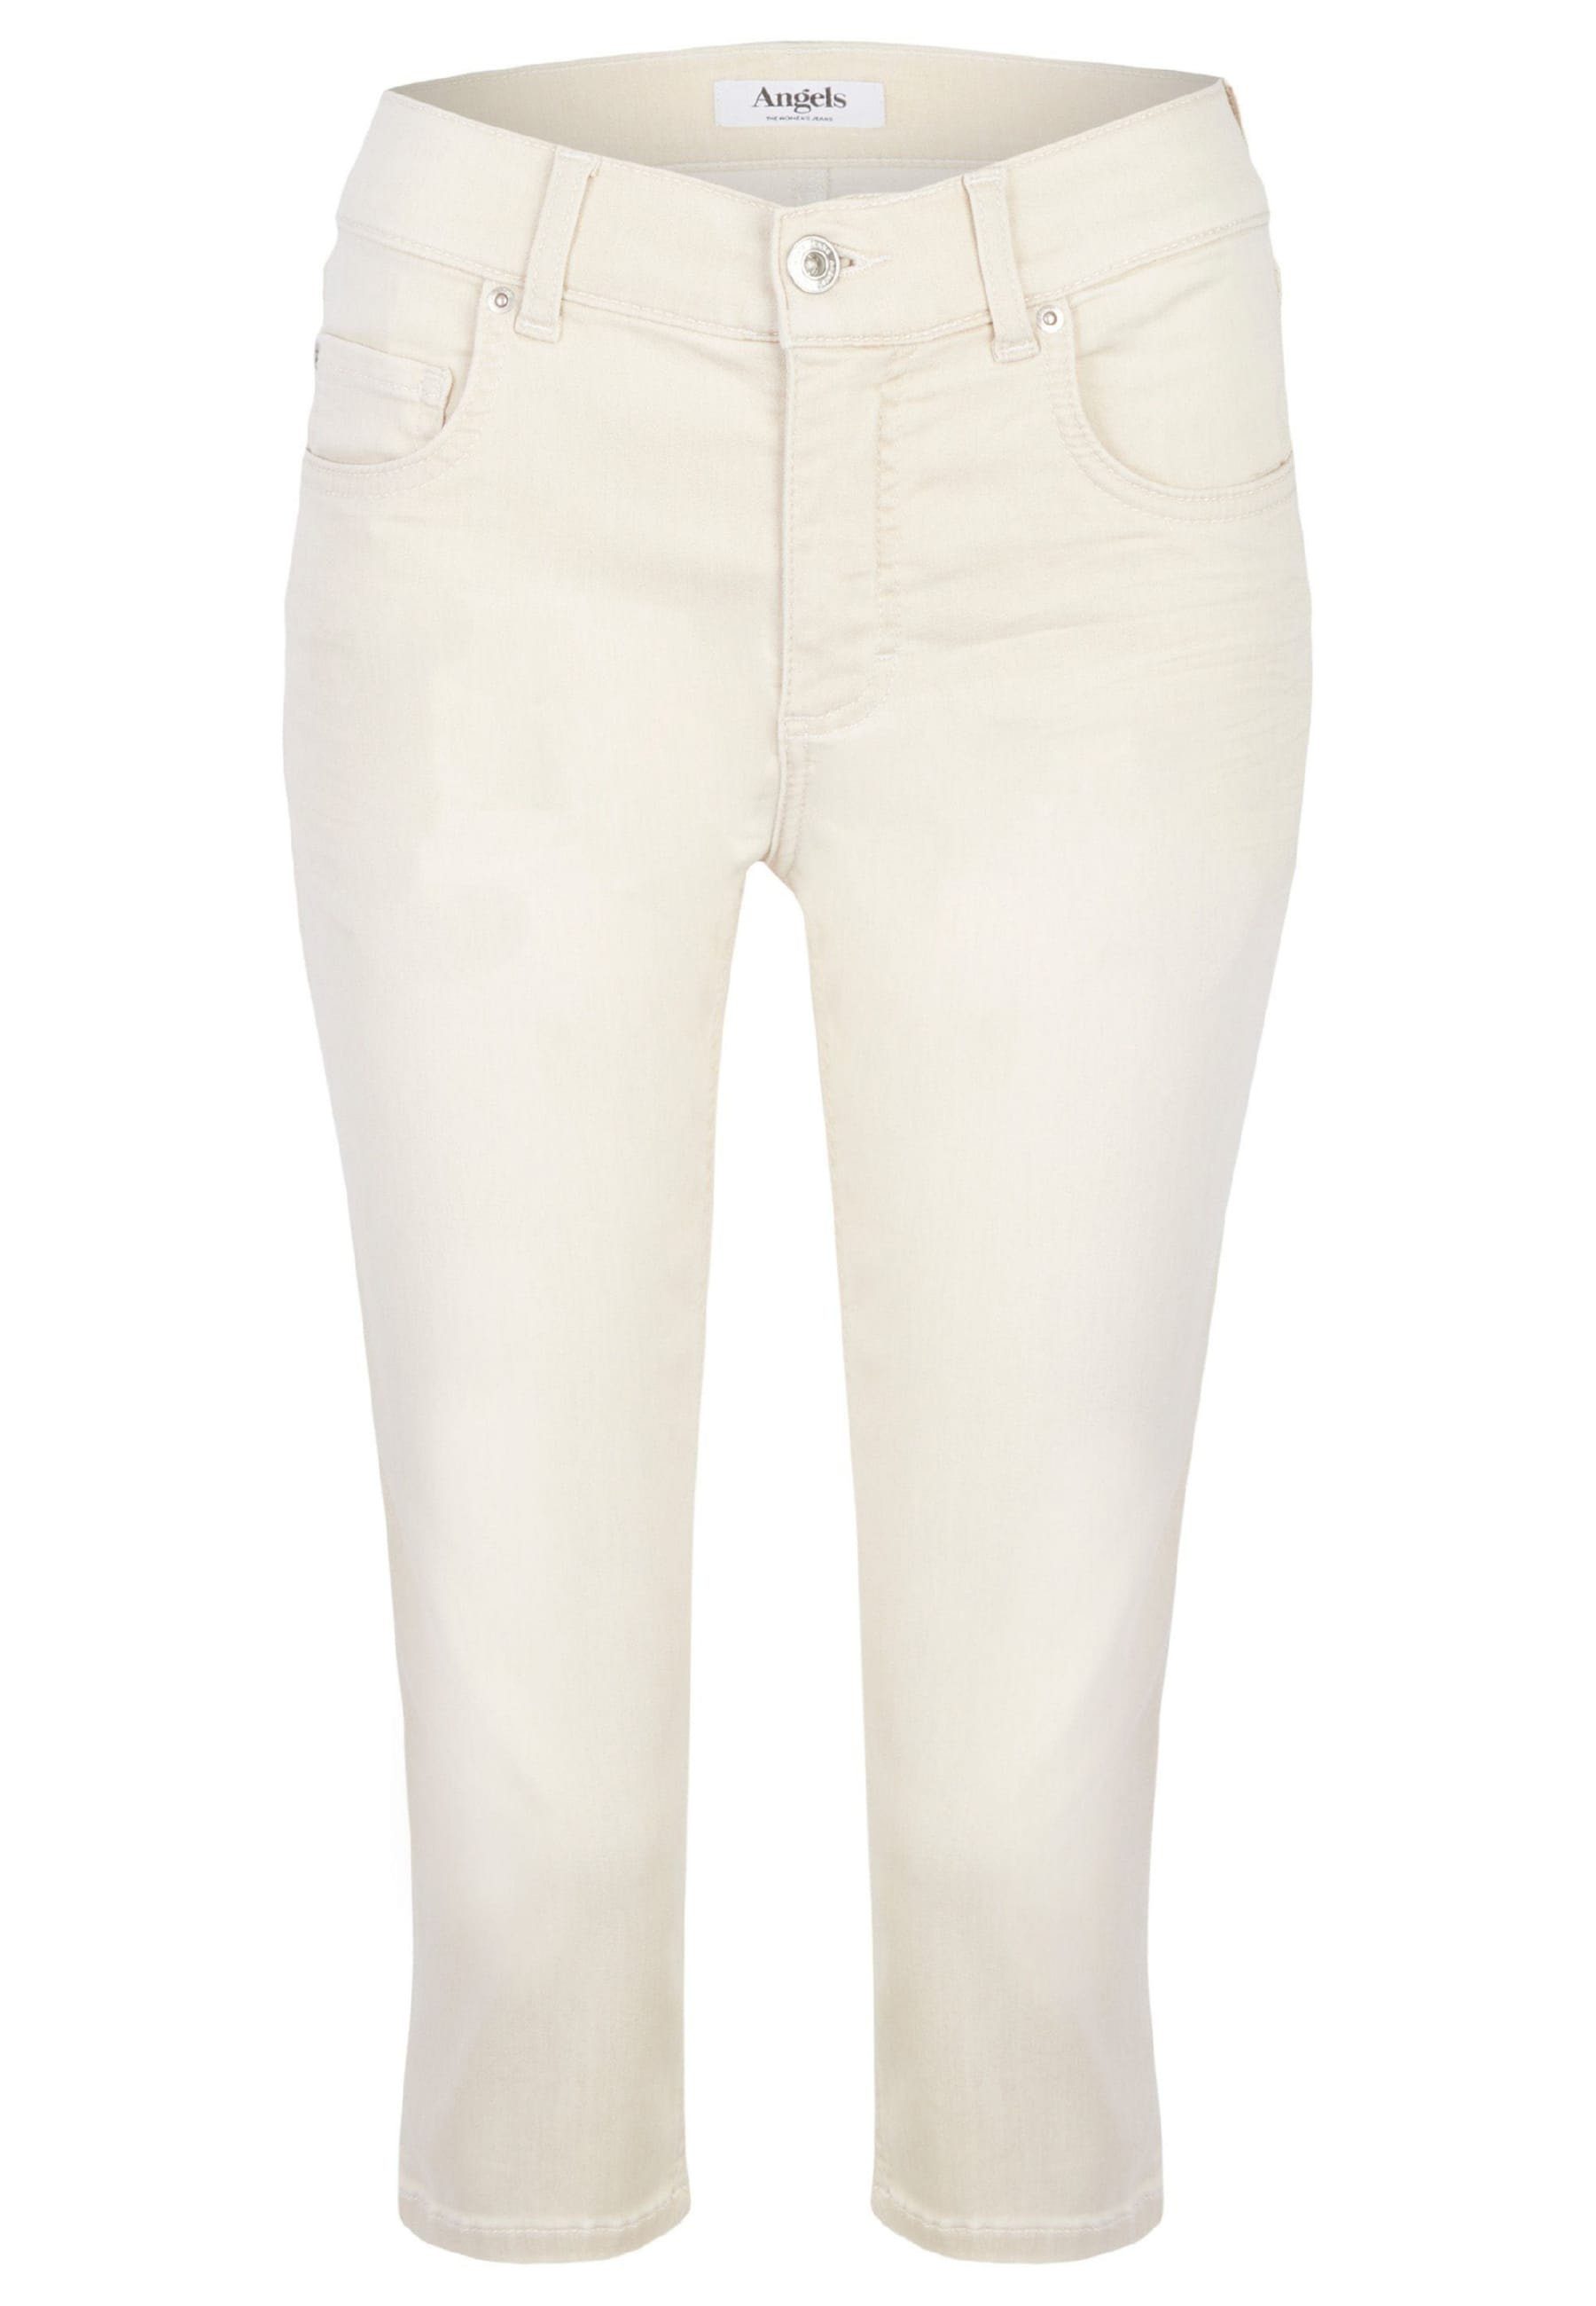 ANGELS Slim-fit-Jeans Jeans Anacapri mit Stretch used Label-Applikationen beige Super Denim light mit